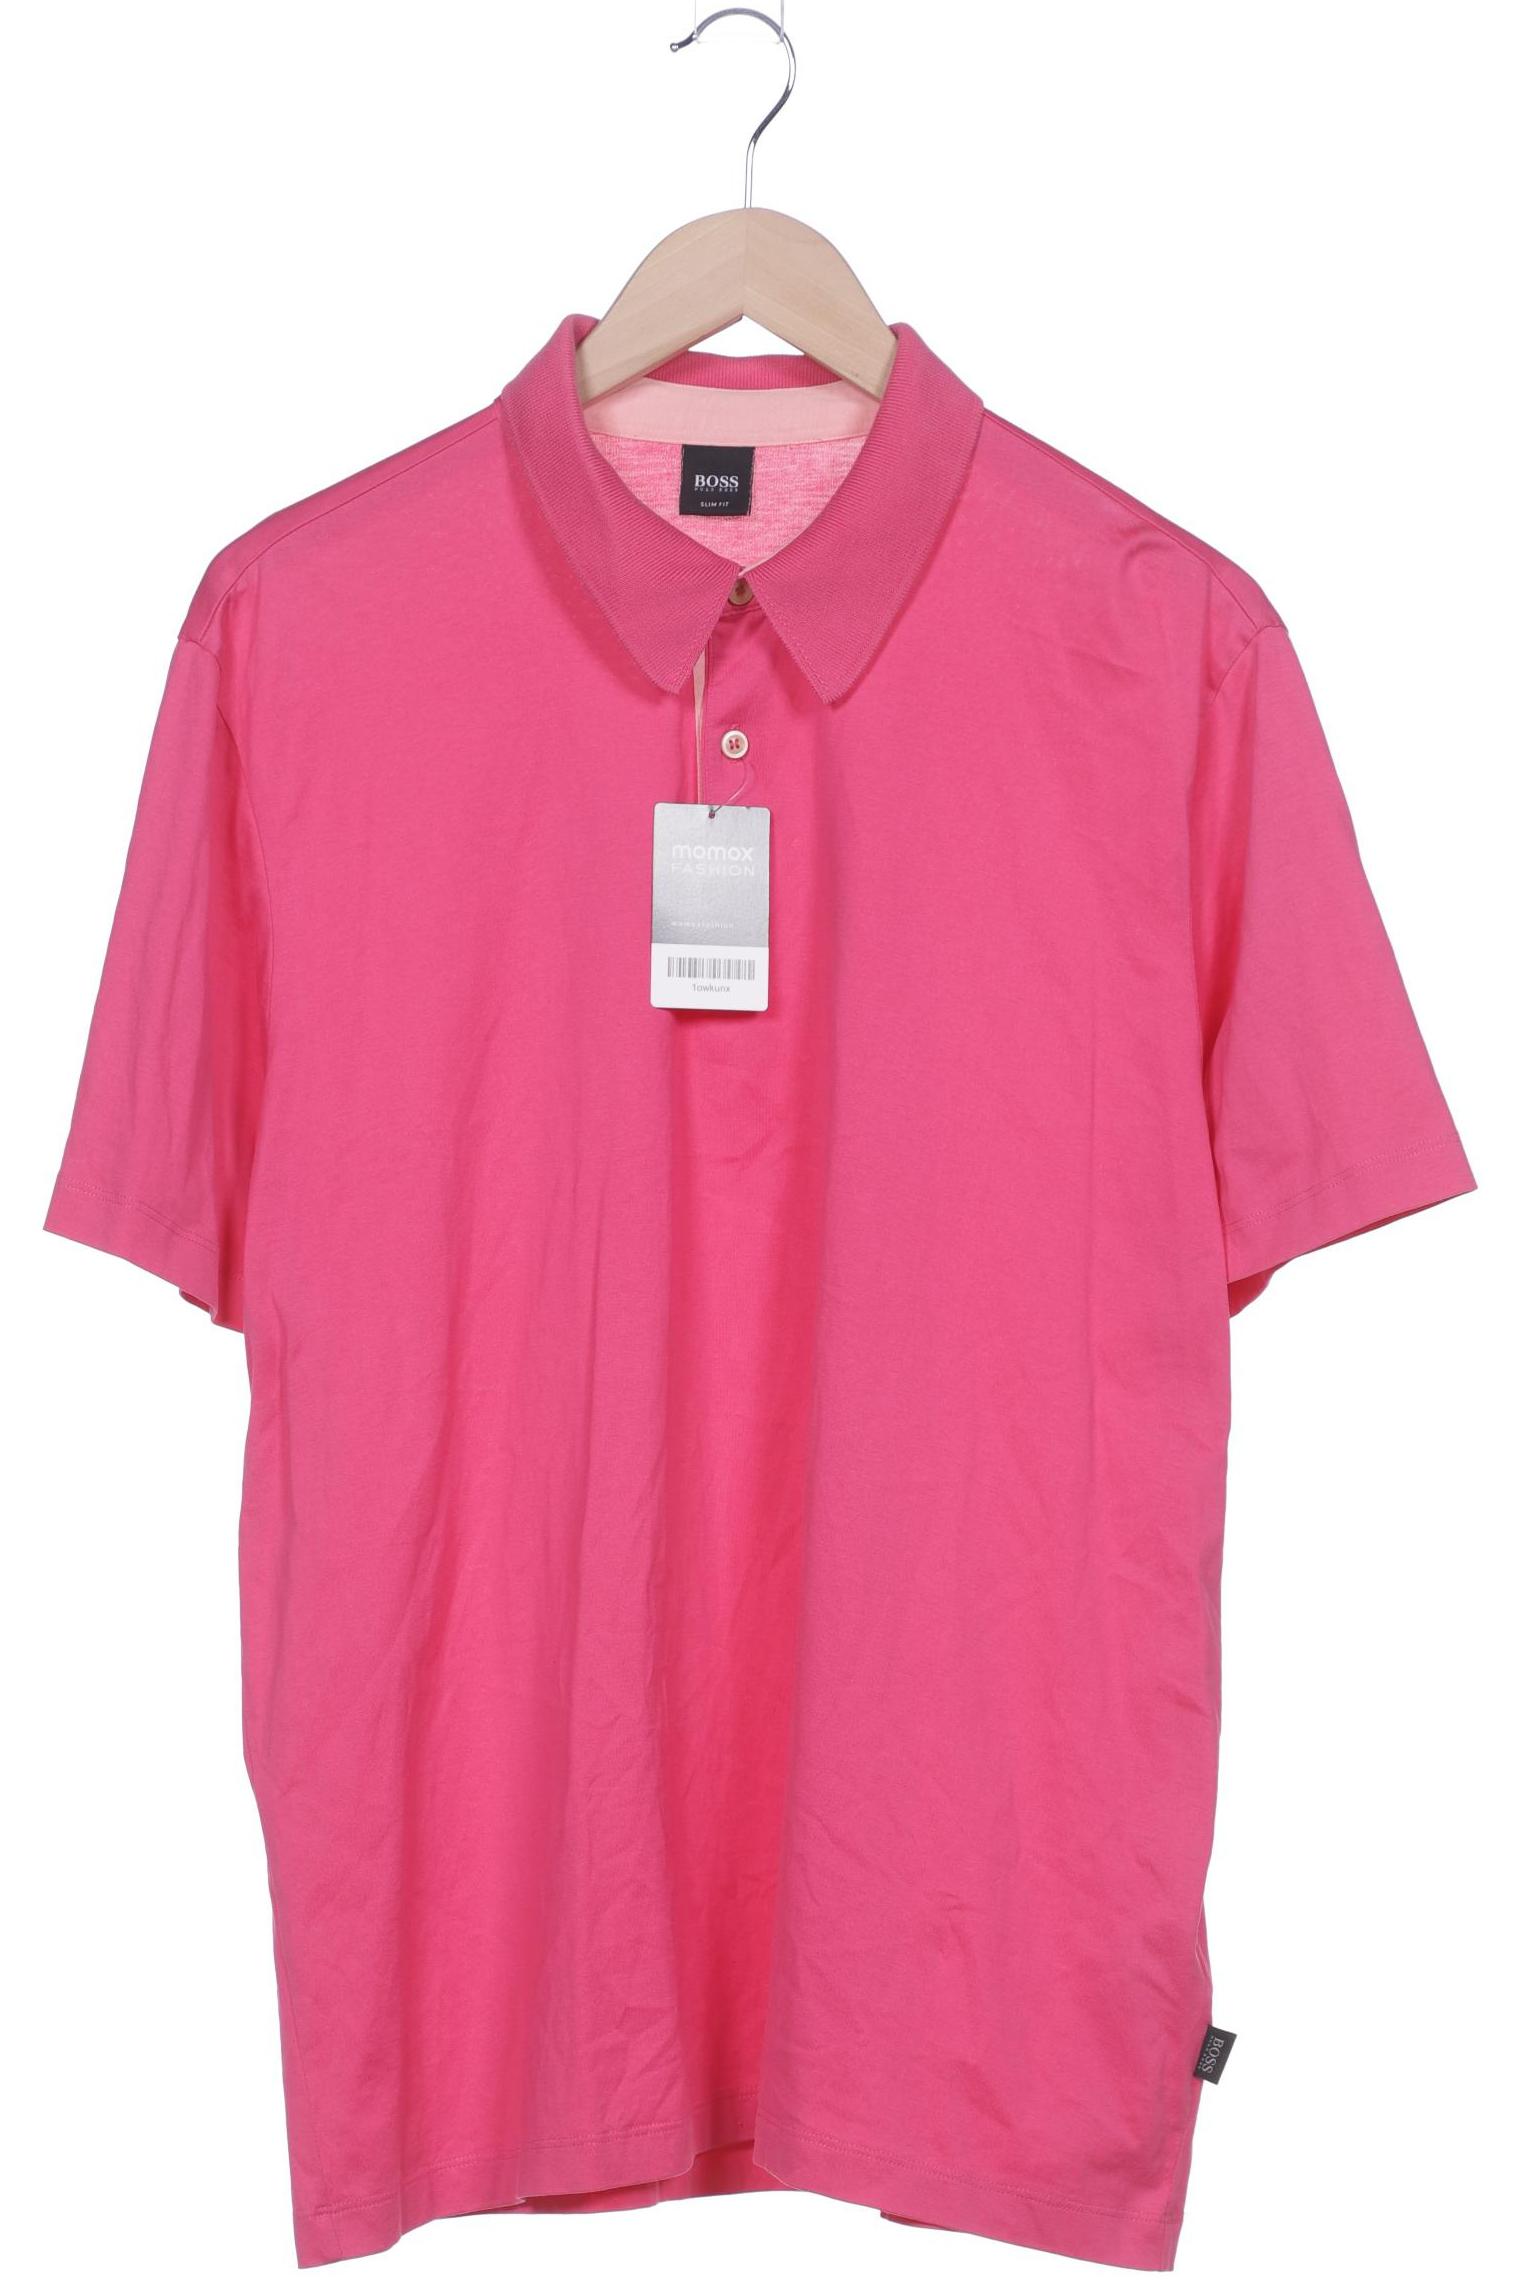 BOSS by Hugo Boss Herren Poloshirt, pink von BOSS by Hugo Boss